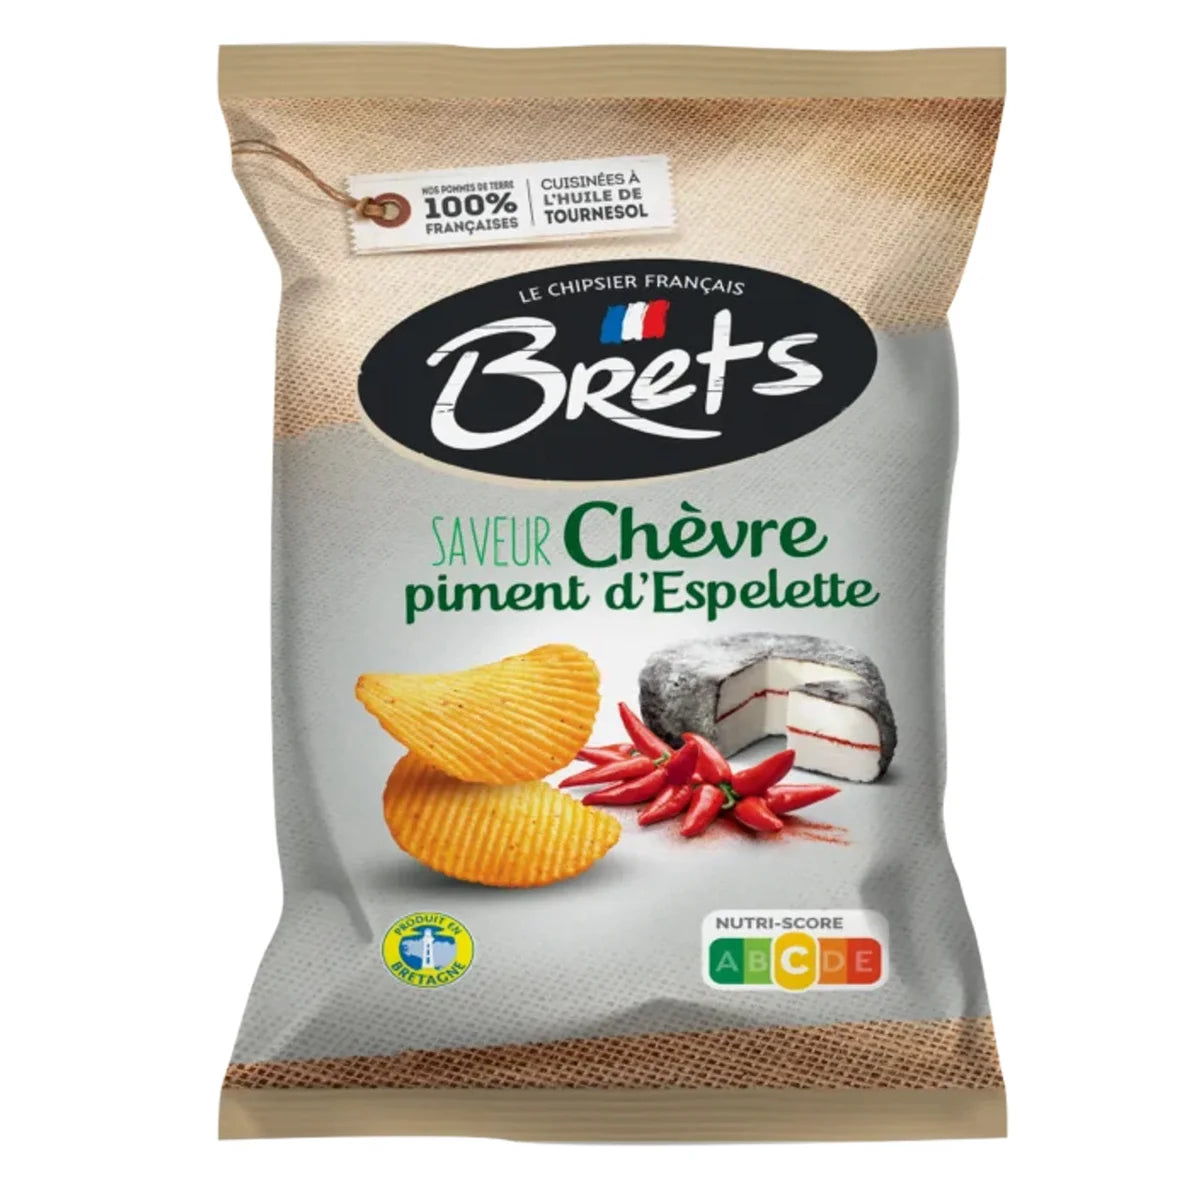 Brets Goat Cheese and Espelette Chili Pepper Chips, 4.4oz (125g)